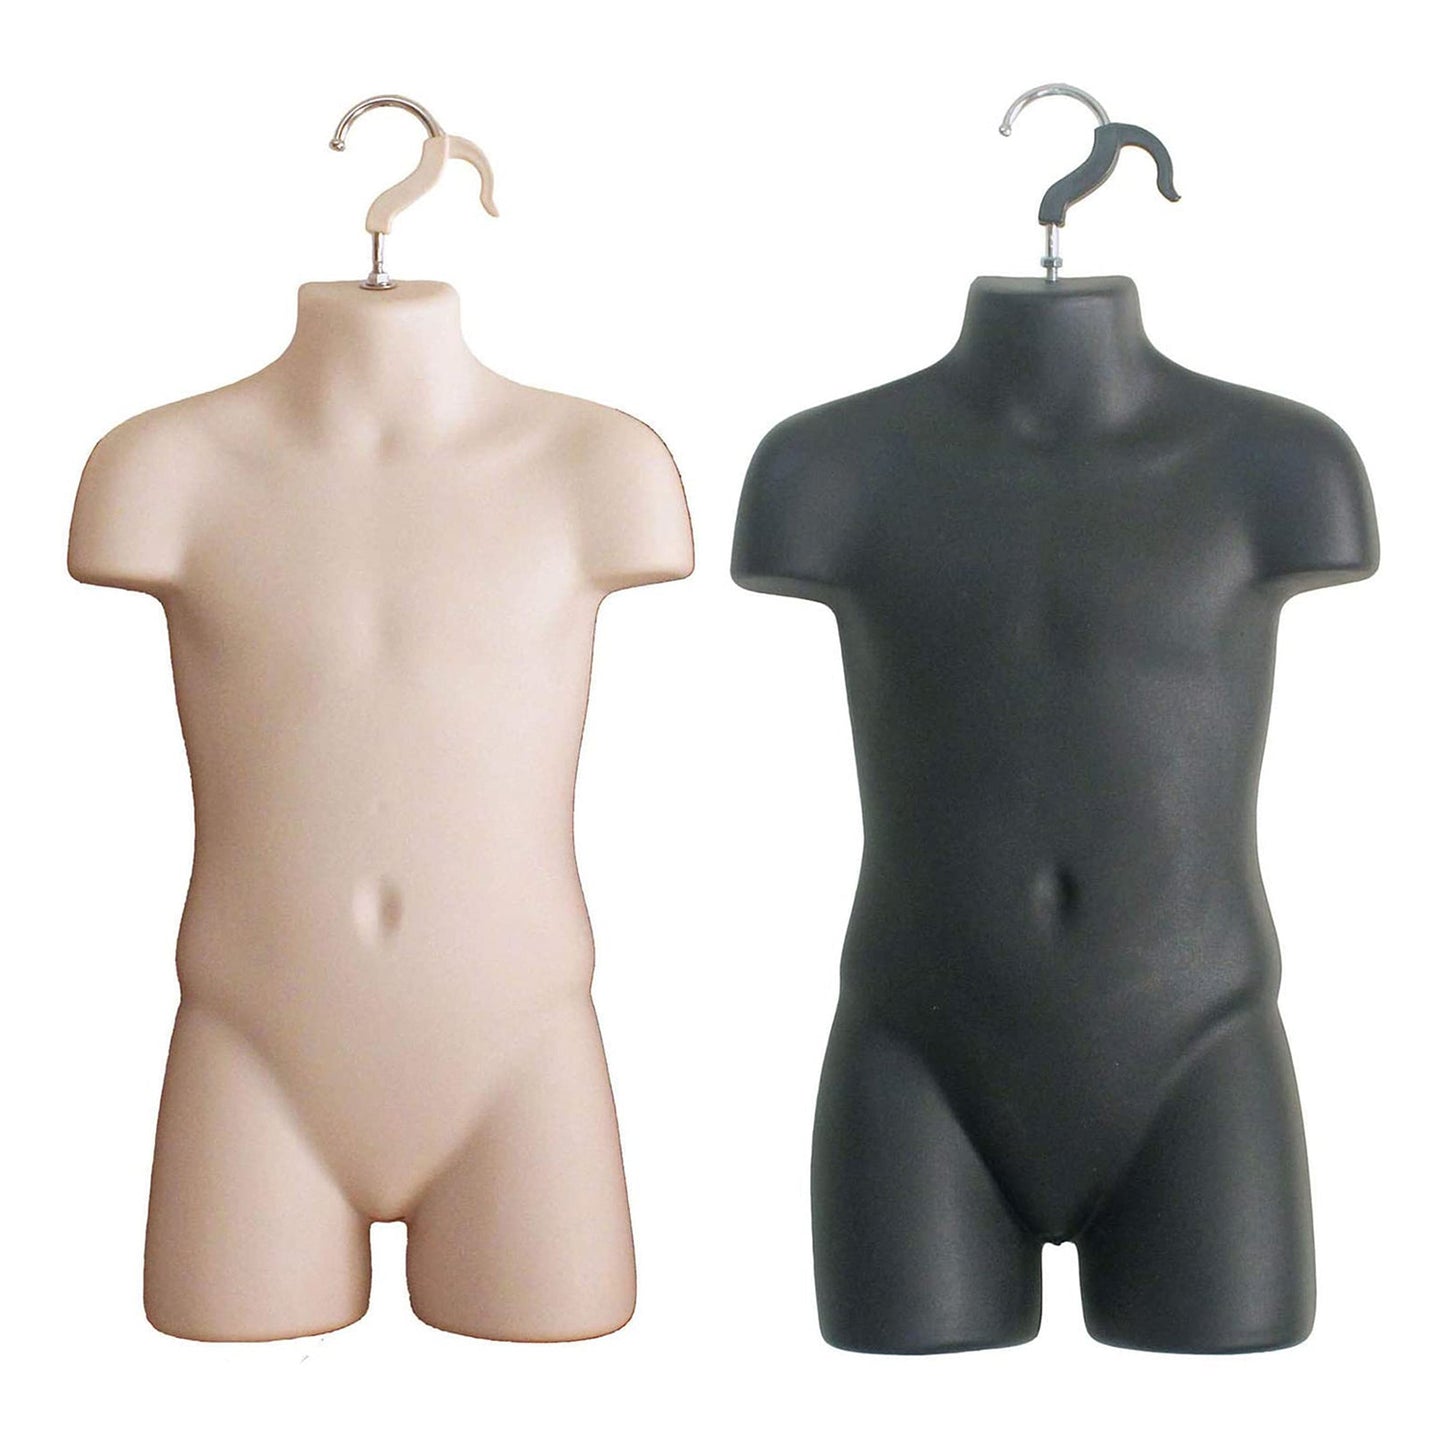 Male + Female Mannequin Torsos FLESH + 2 Stands + 2 Hooks for Hanging